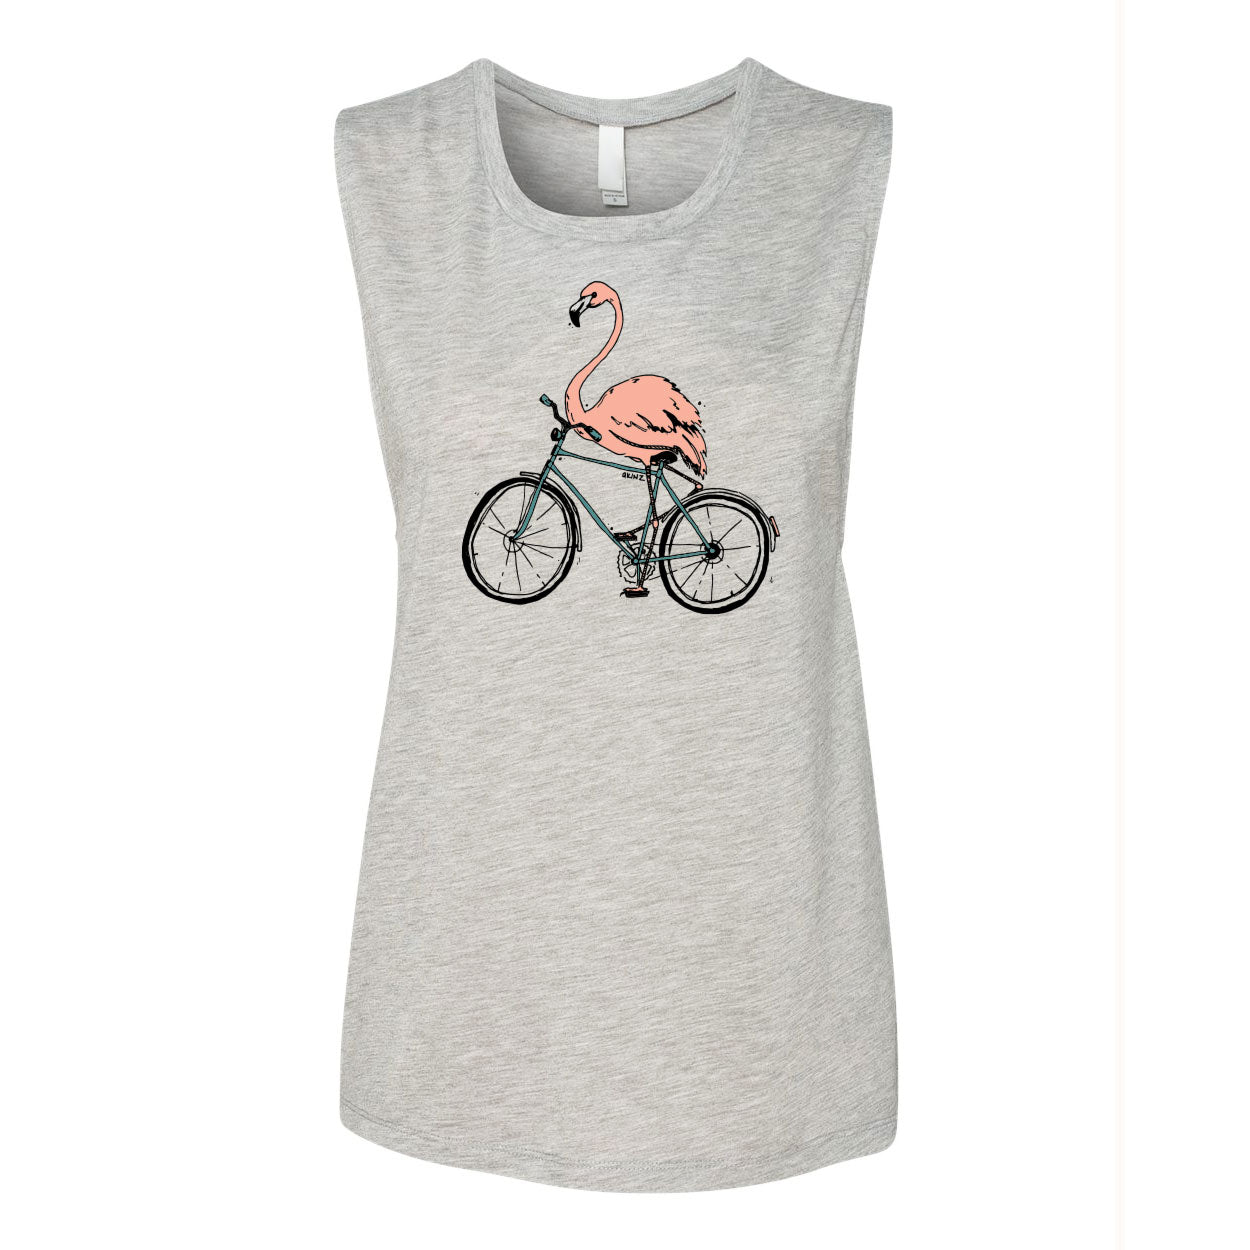 flamingo-on-a-bike-no-handlebars-tank-top.jpg